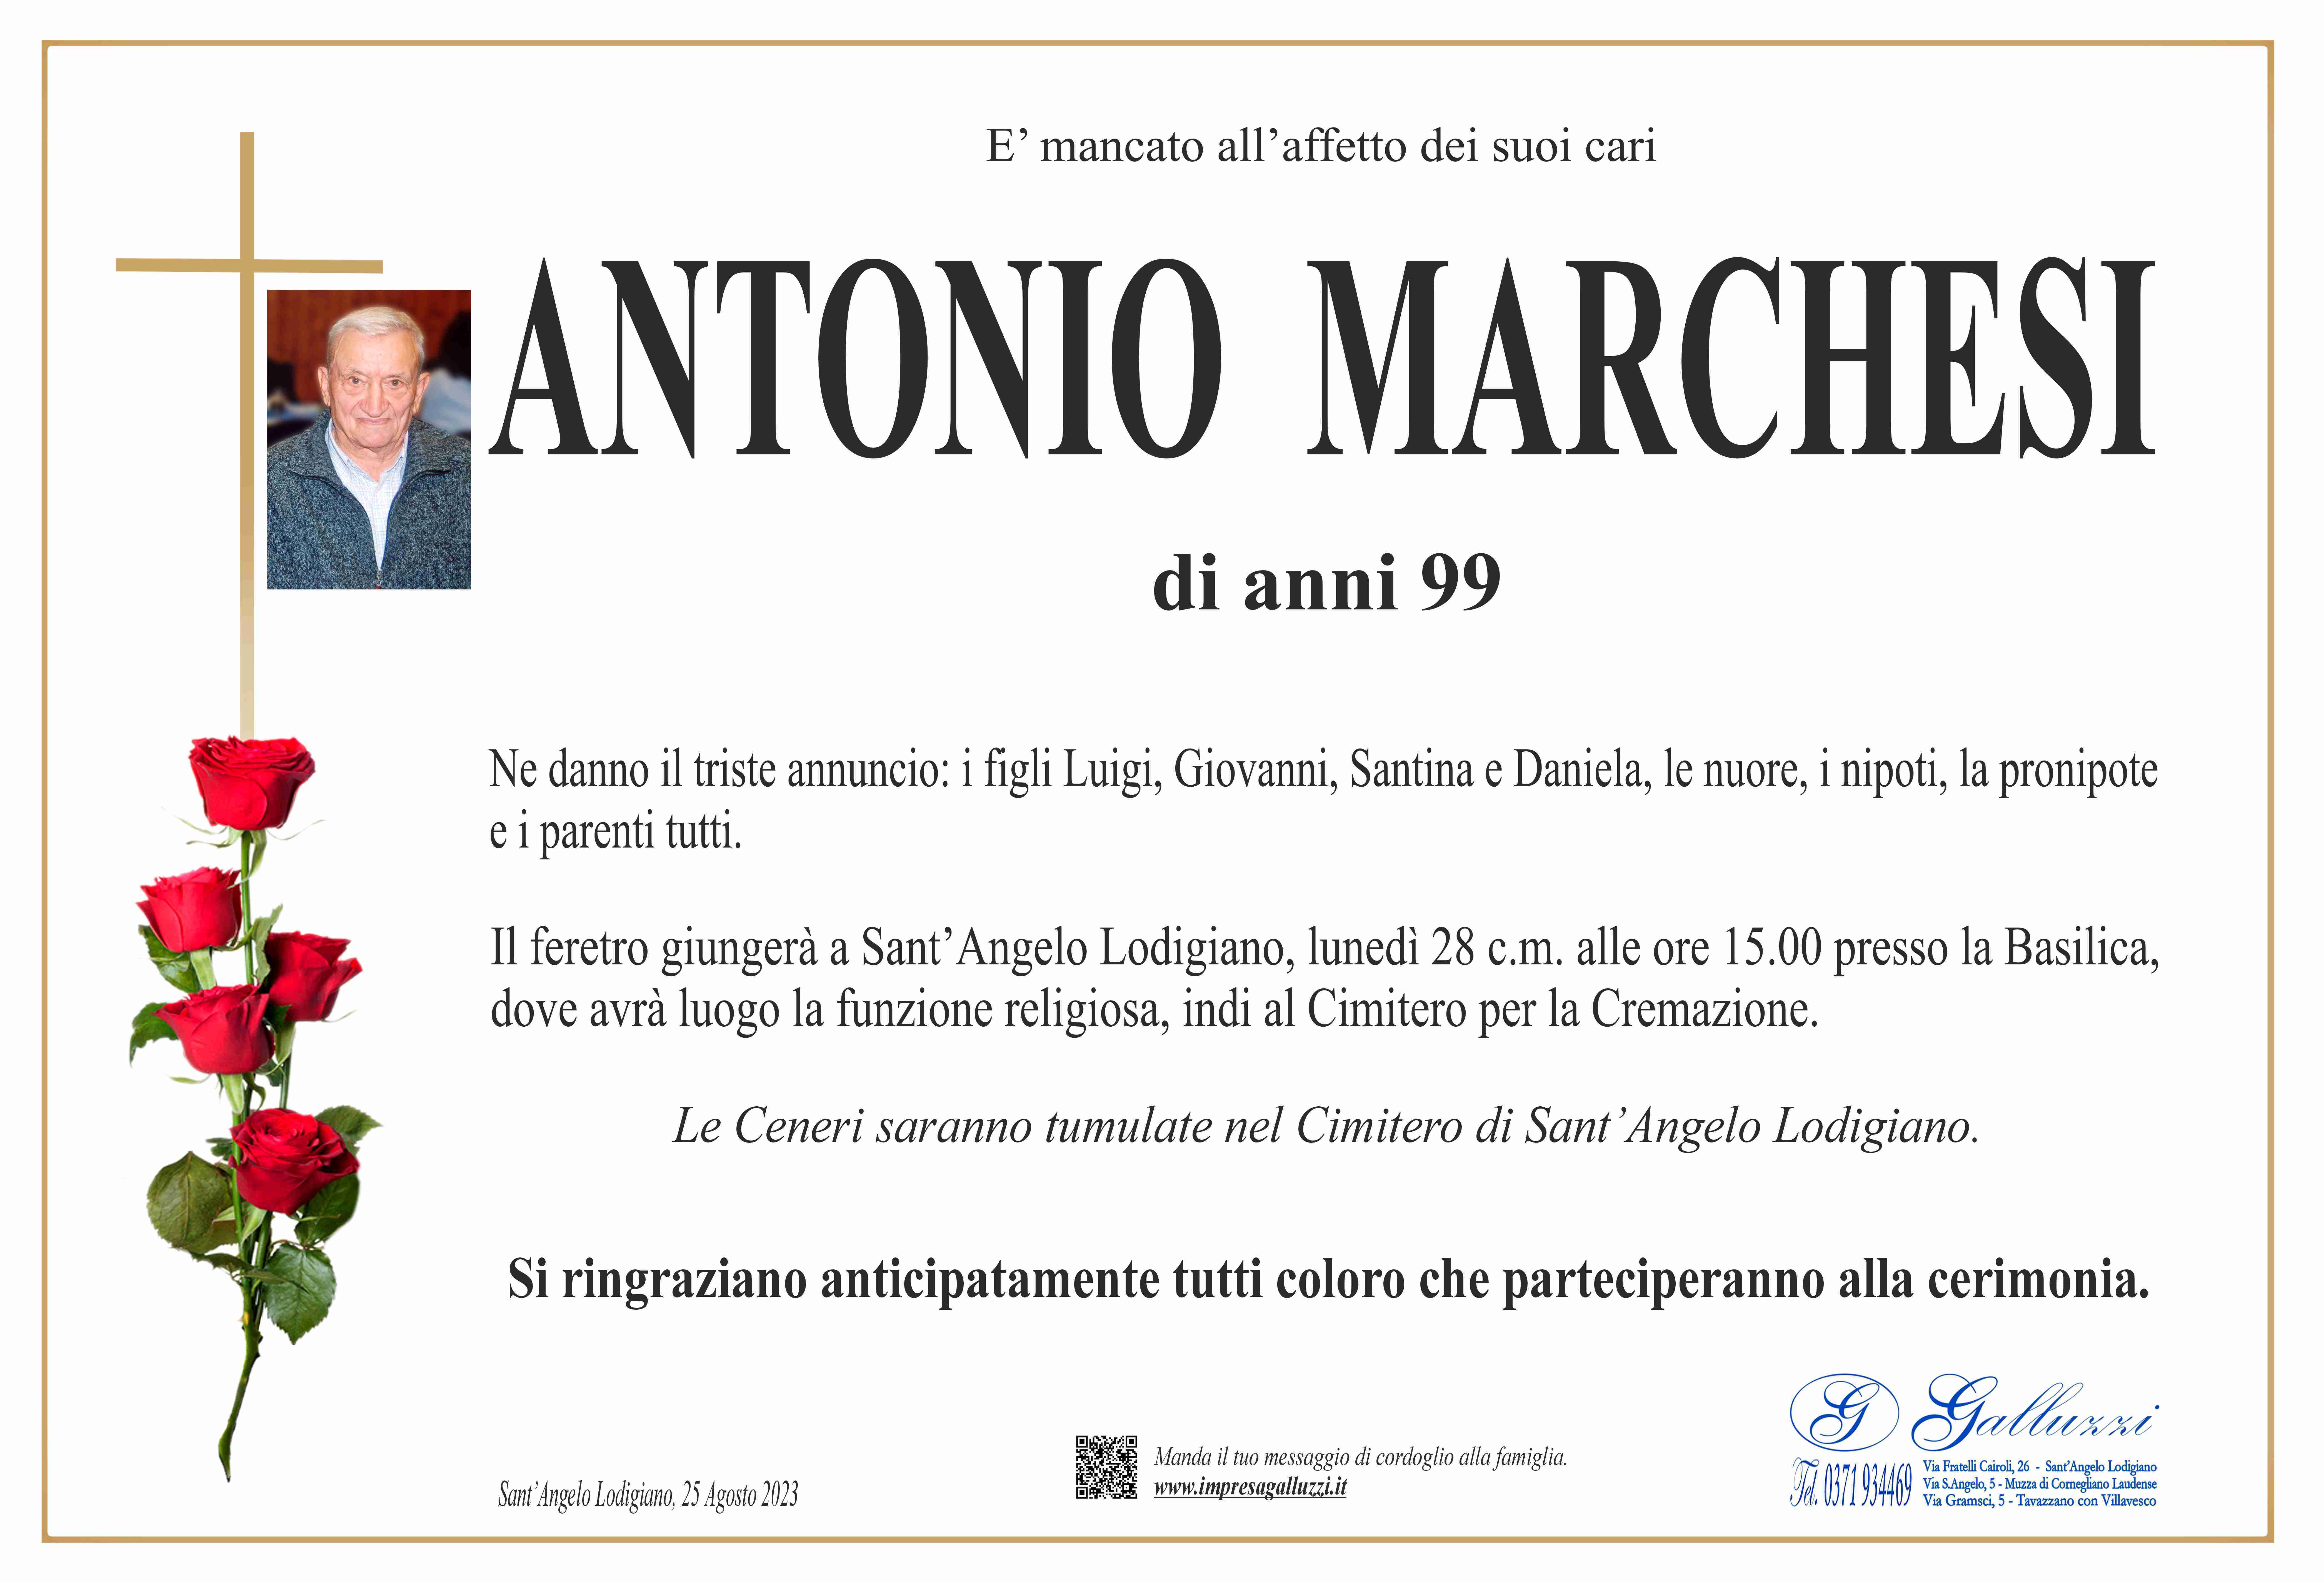 Antonio Marchesi